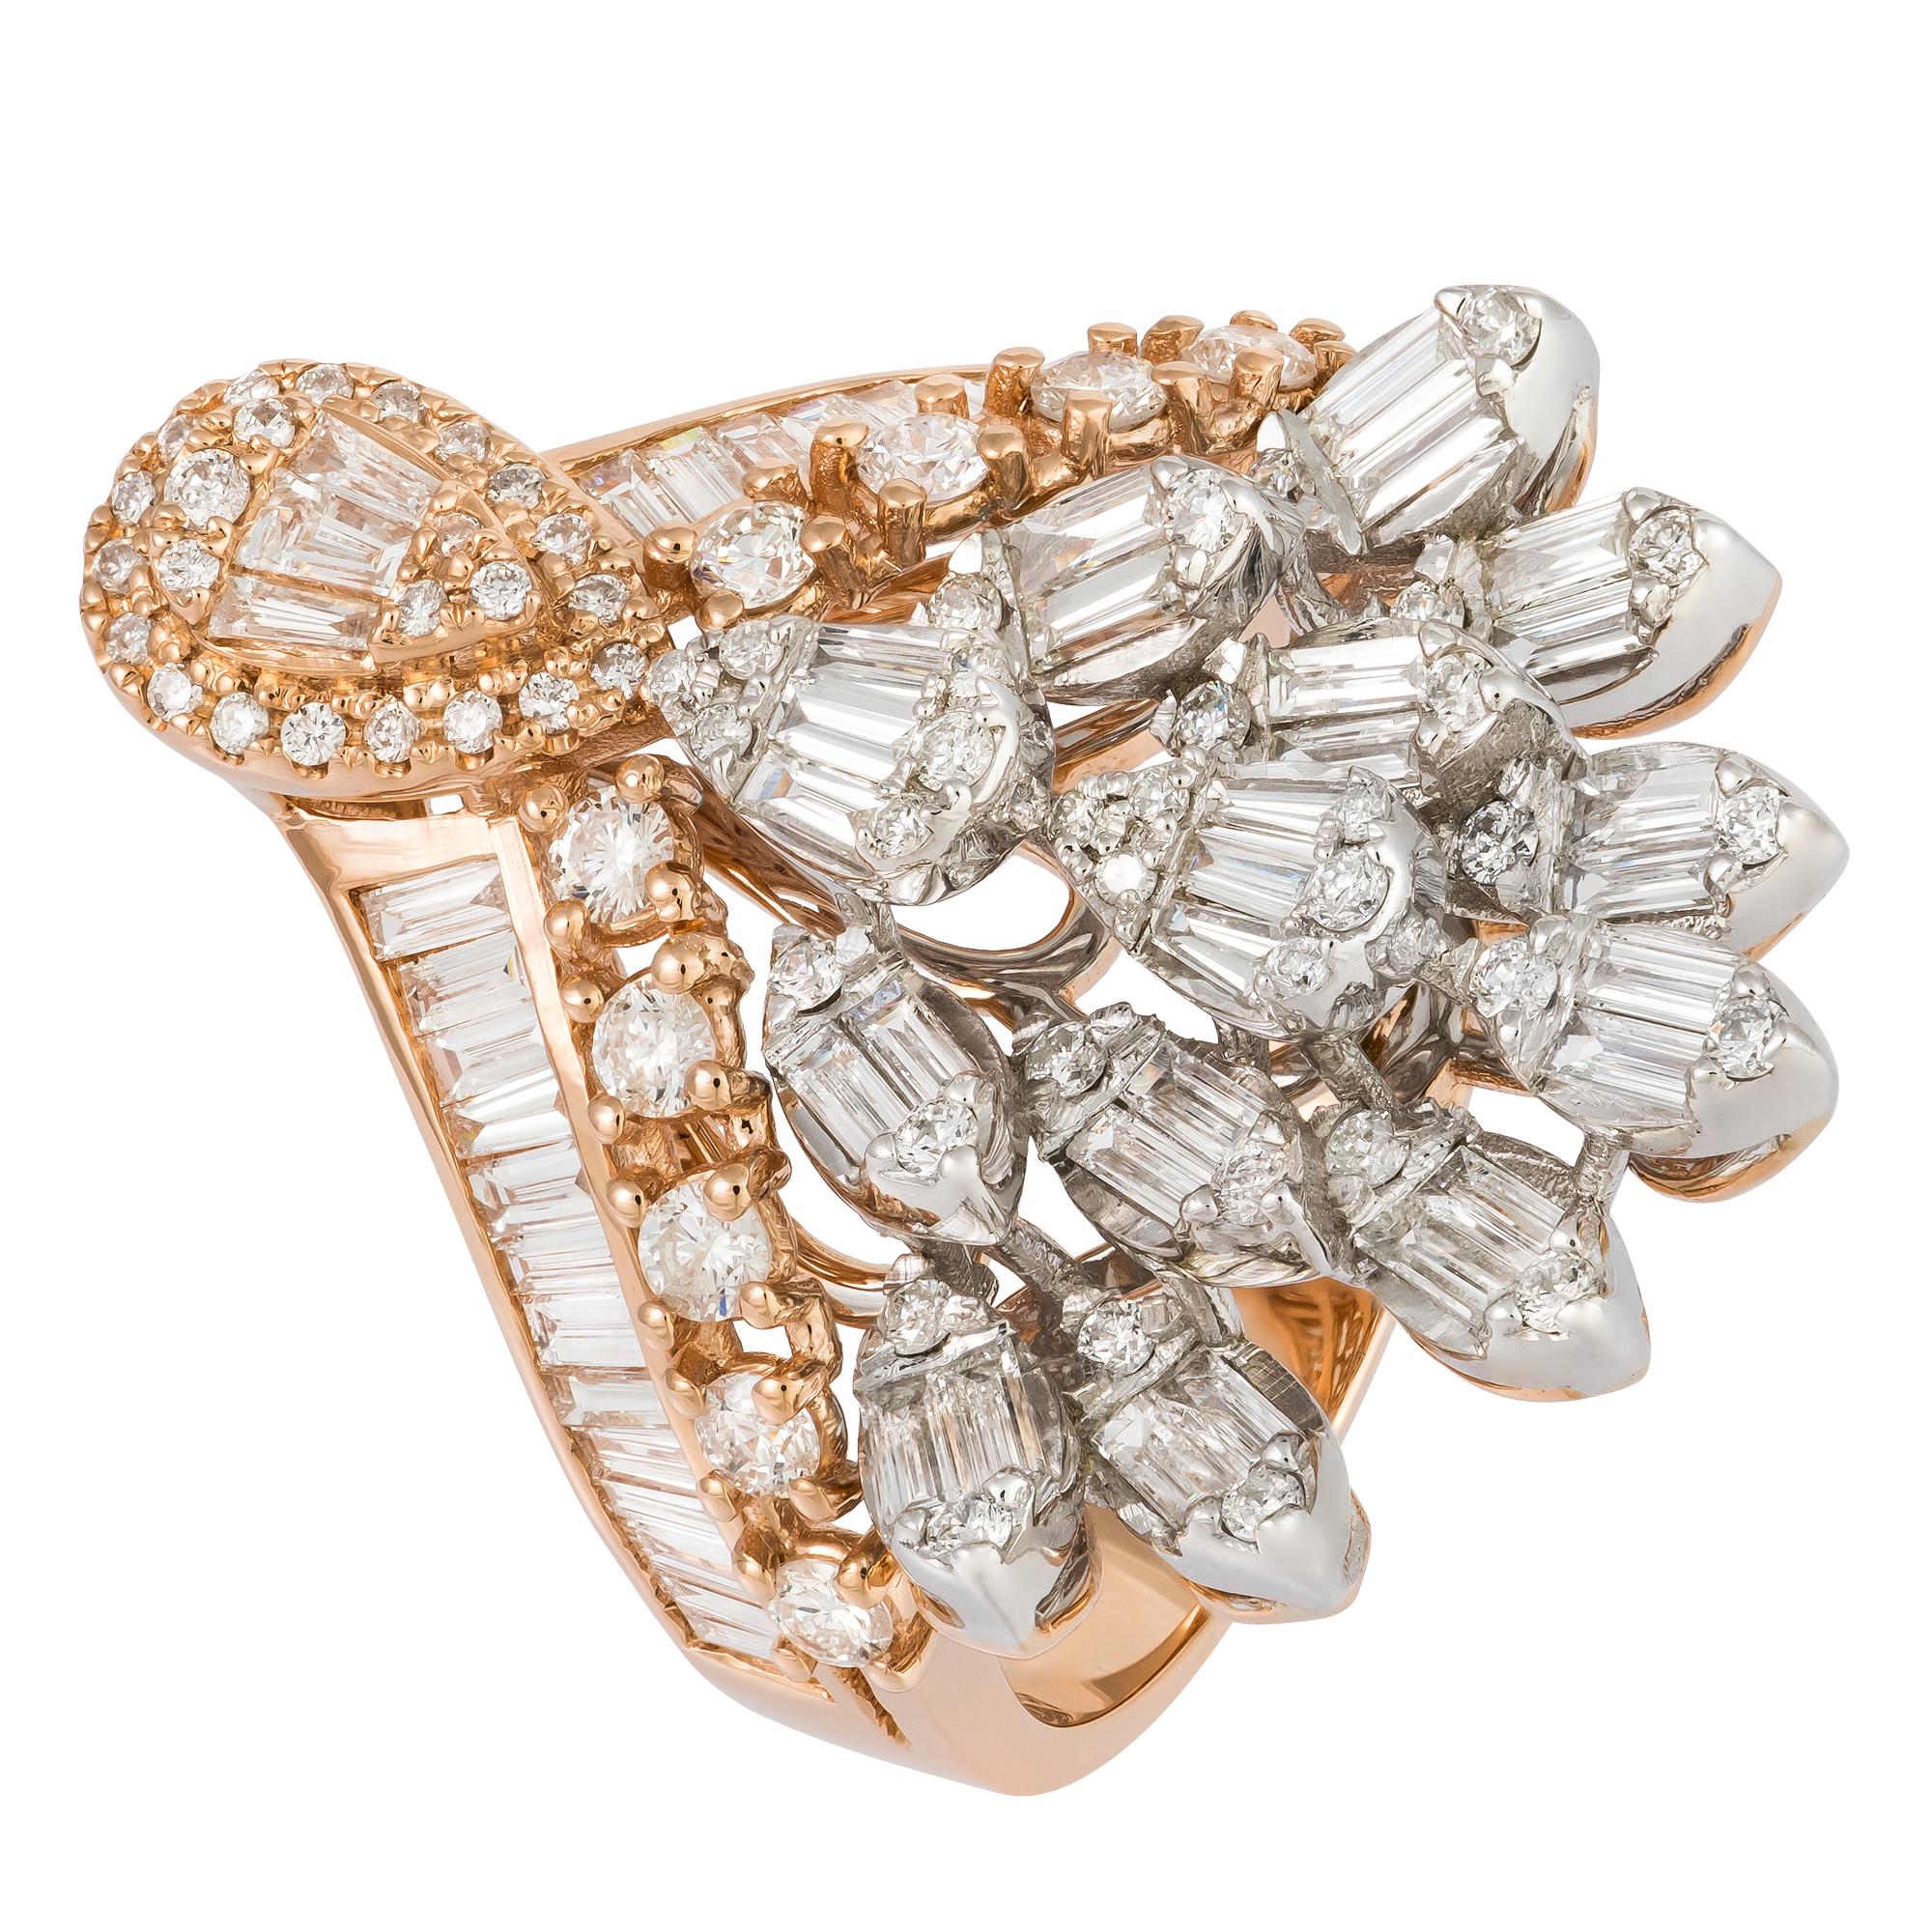 For Sale:  Sparkling  White Pink 18K Gold White Diamond Ring For Her 3